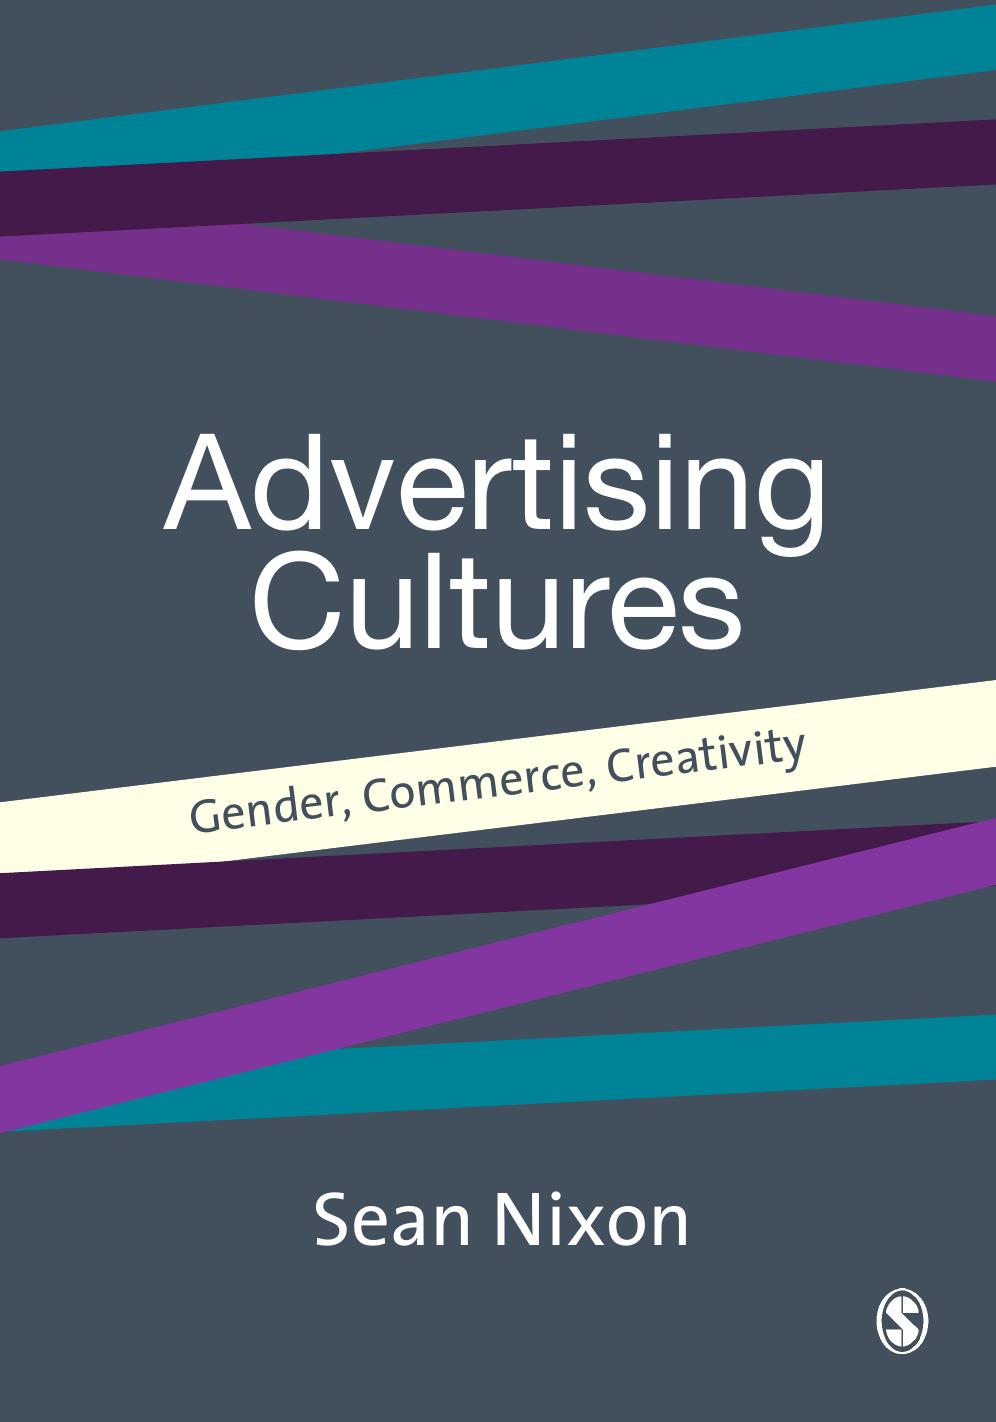 Sean Nixon Advertising Cultures Gender, Commerce, Creativity Culture, Representation and Identity series 2003